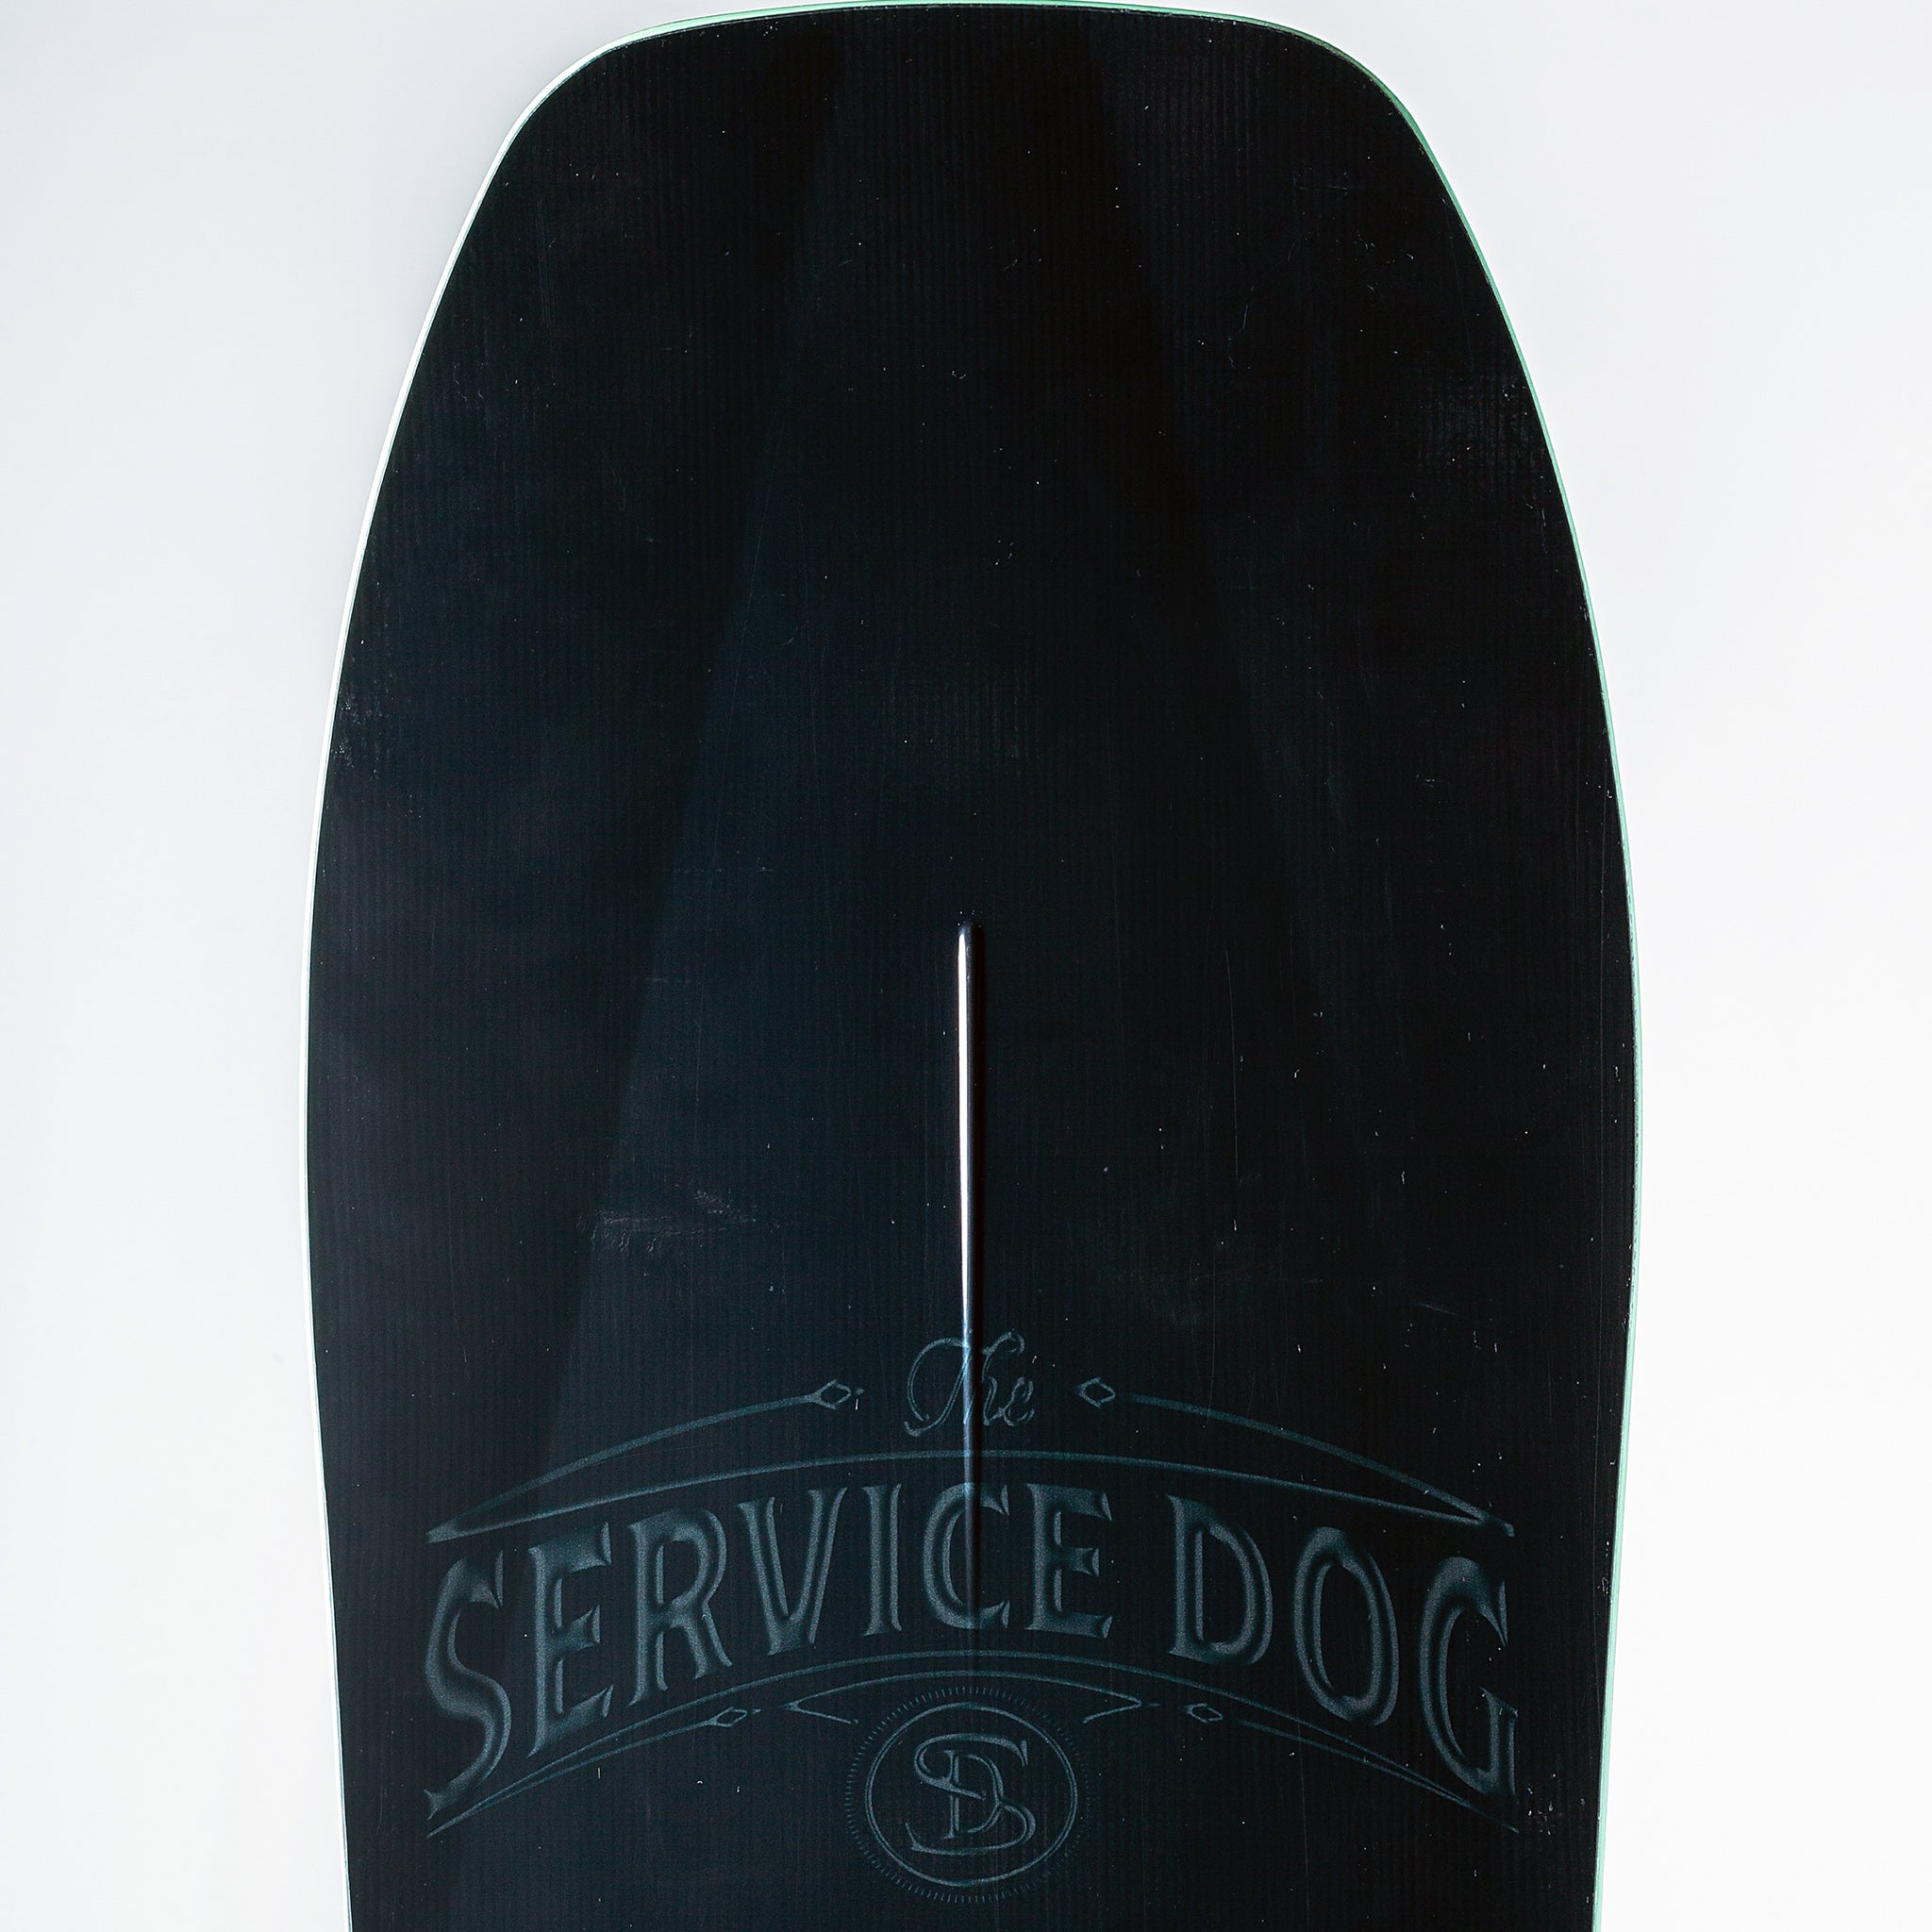 22/23 Men's Service Dog